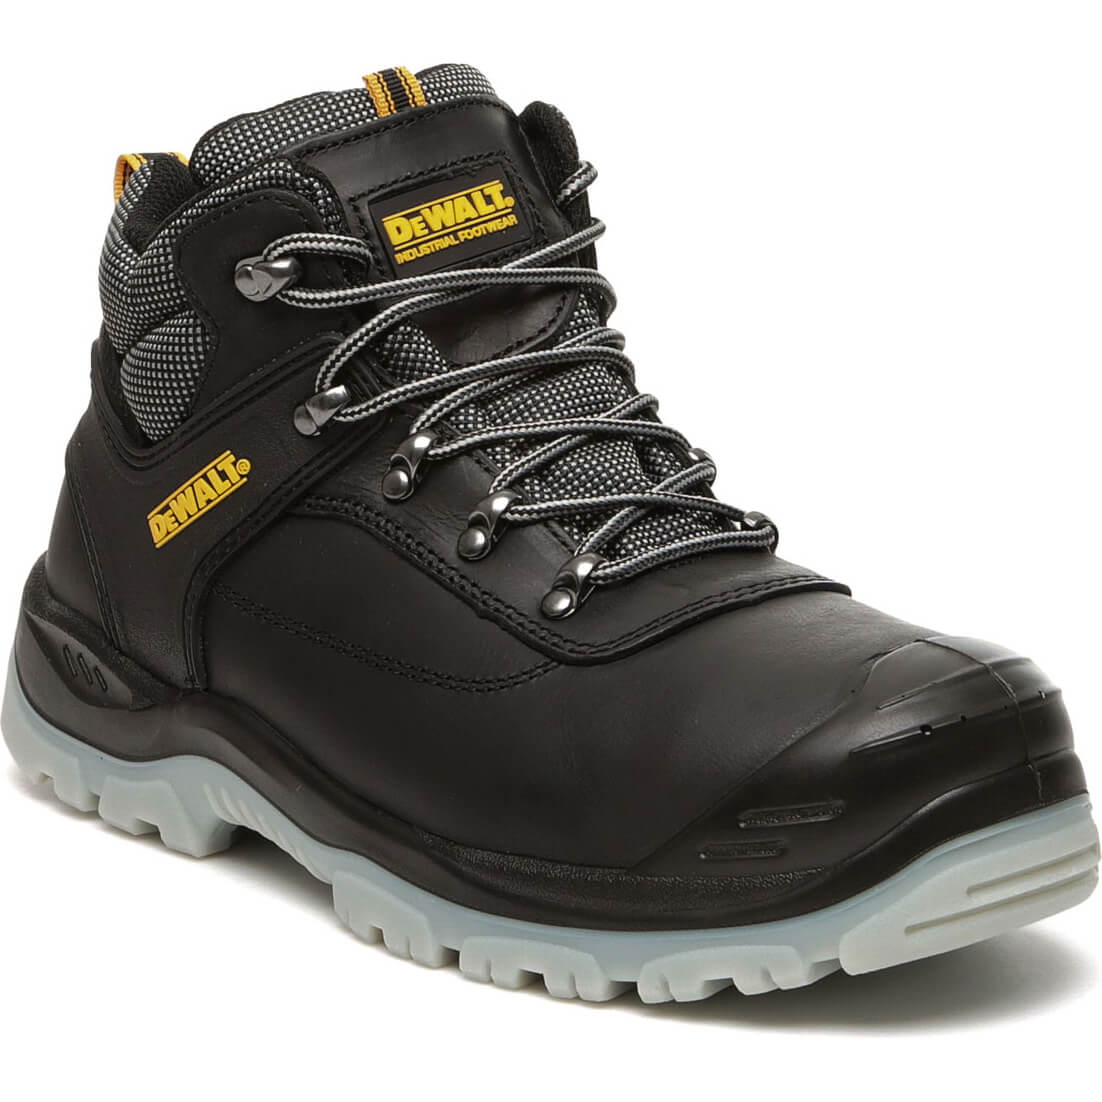 Photos - Safety Equipment DeWALT Laser Safety Hiker Boots Black Size 6 